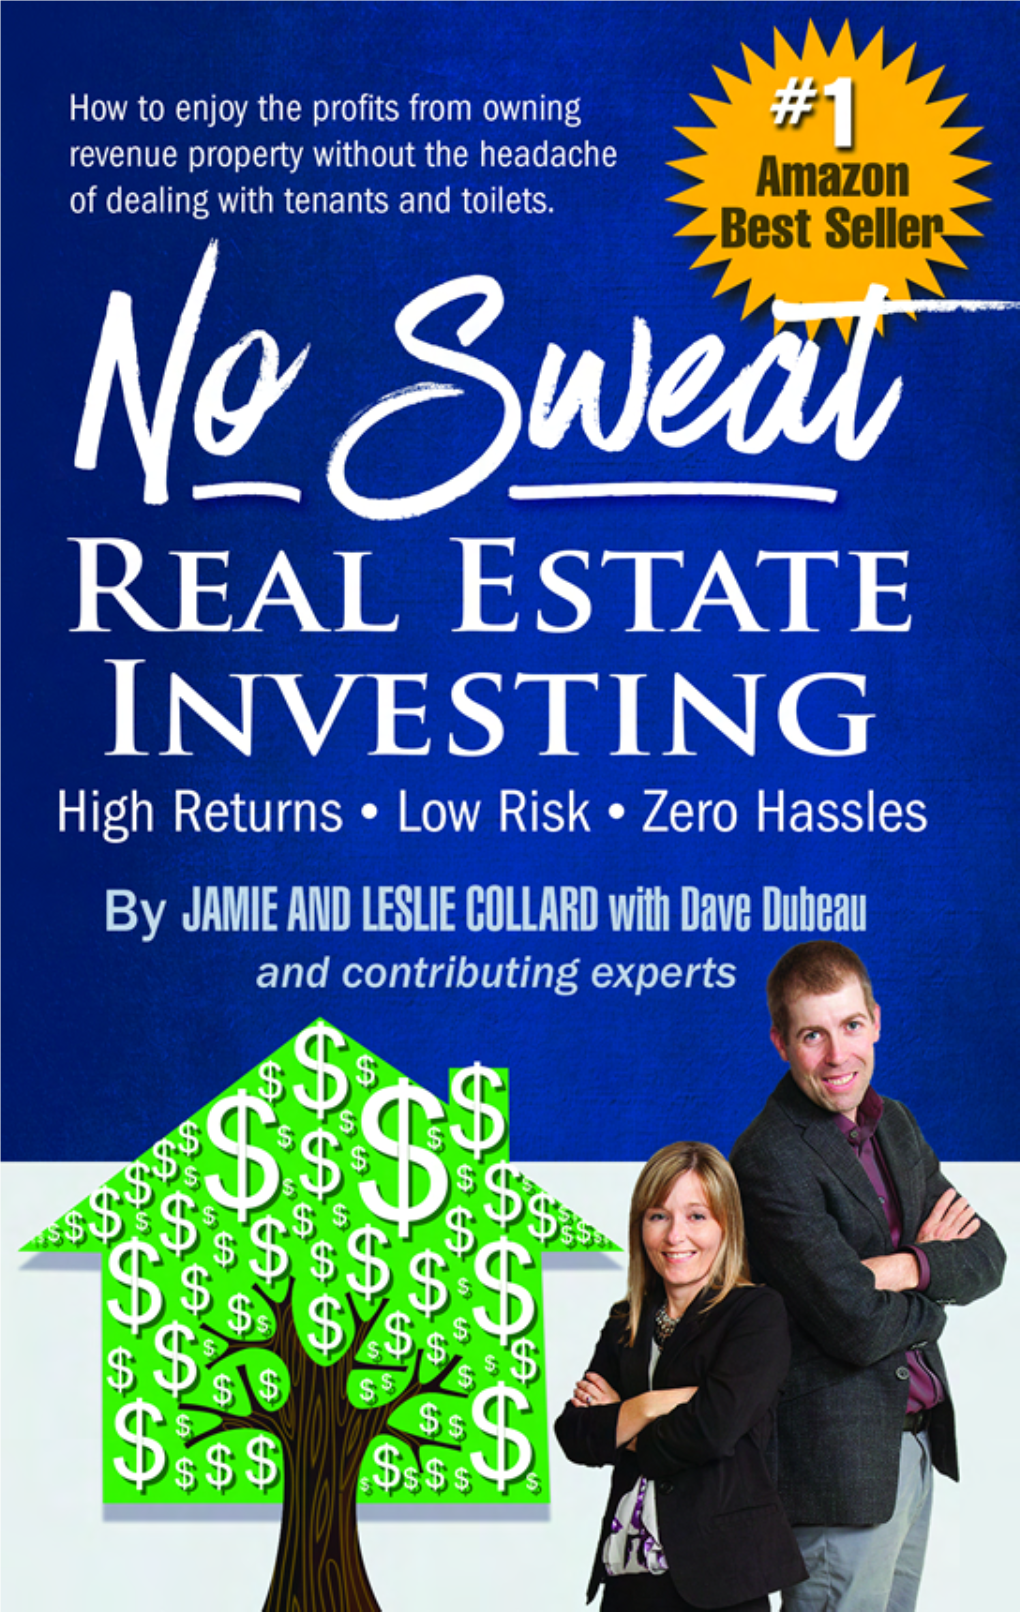 No Sweat Real Estate Investing